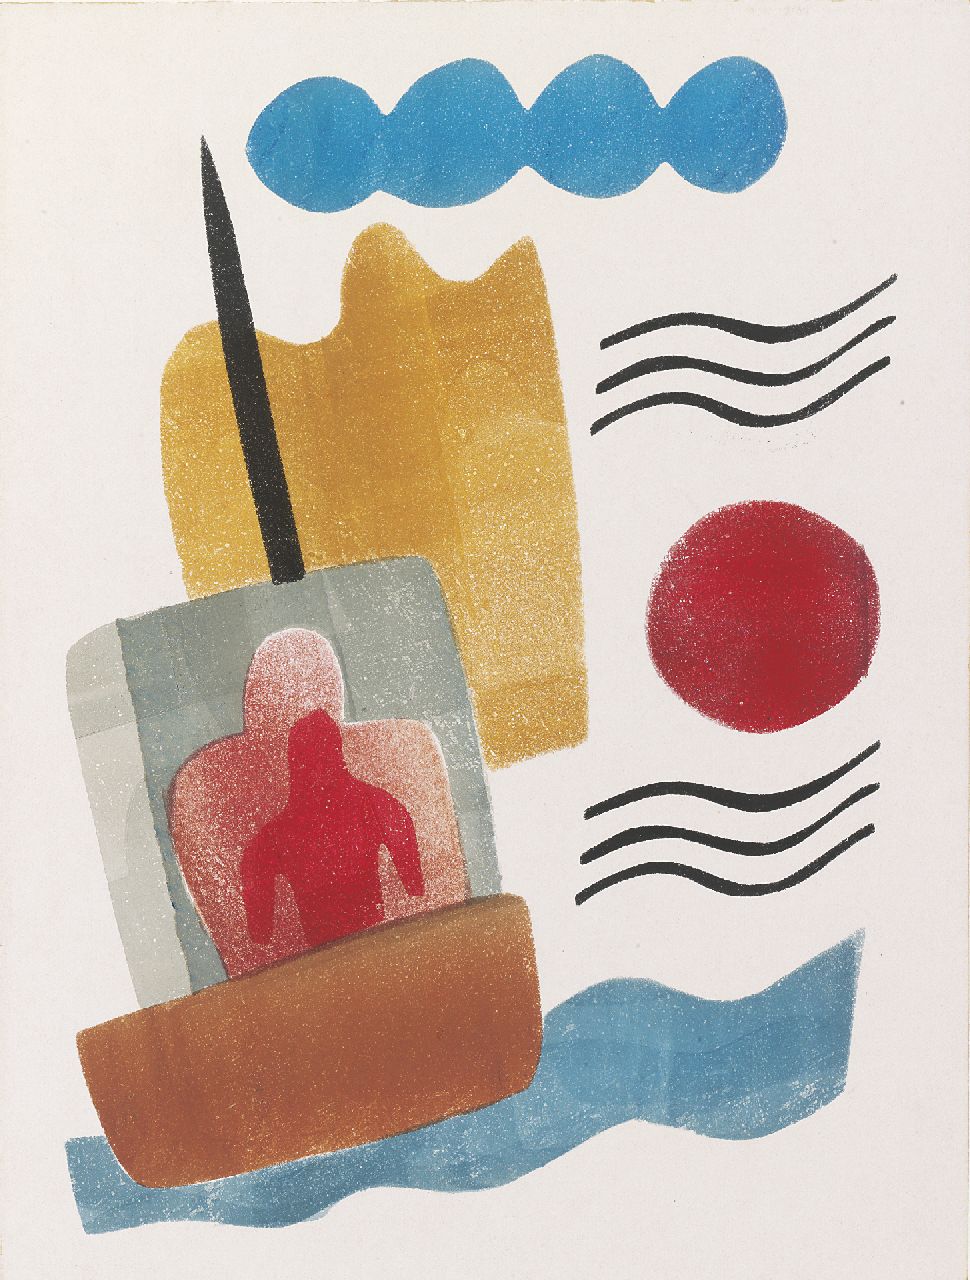 Werkman H.N.  | Hendrik Nicolaas Werkman, The Skipper, Chablone, Farbwalze, Druckerfarbe auf Papier 32,7 x 25,0 cm, painted 1935-1936